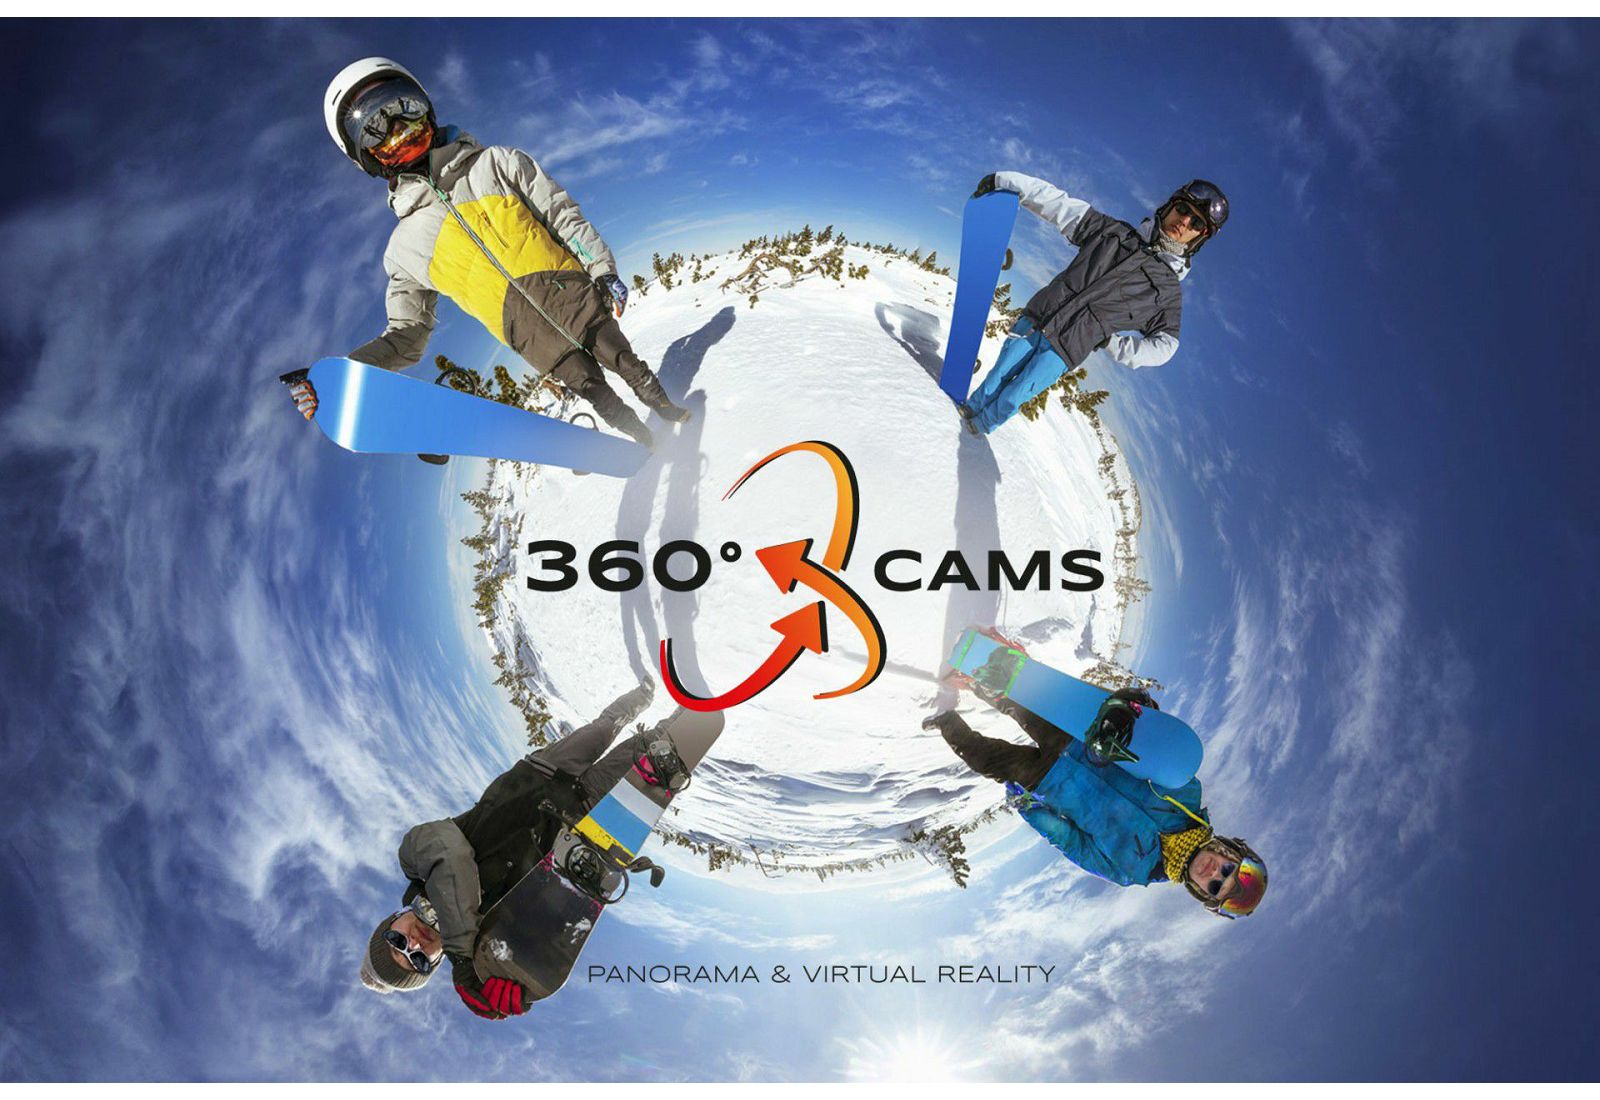 GoXtreme Full Dome 360 Panorama VR Virtual Reality Action Camera FullHD 30fps 2x4MP sportska akcijska kamera (20134)